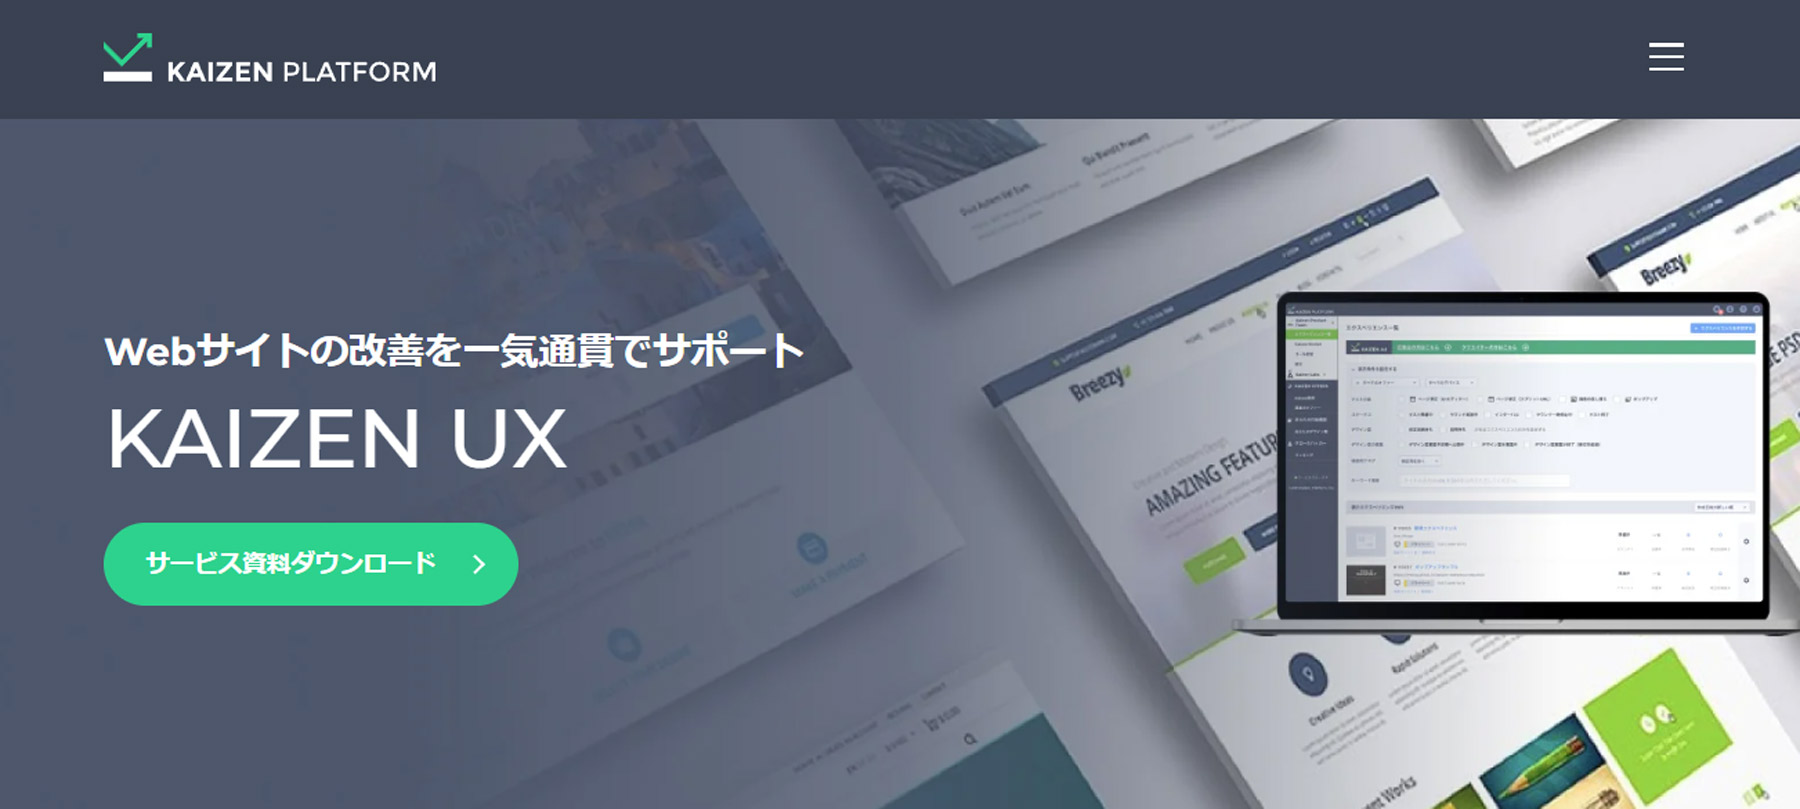 KAIZEN UX公式Webサイト